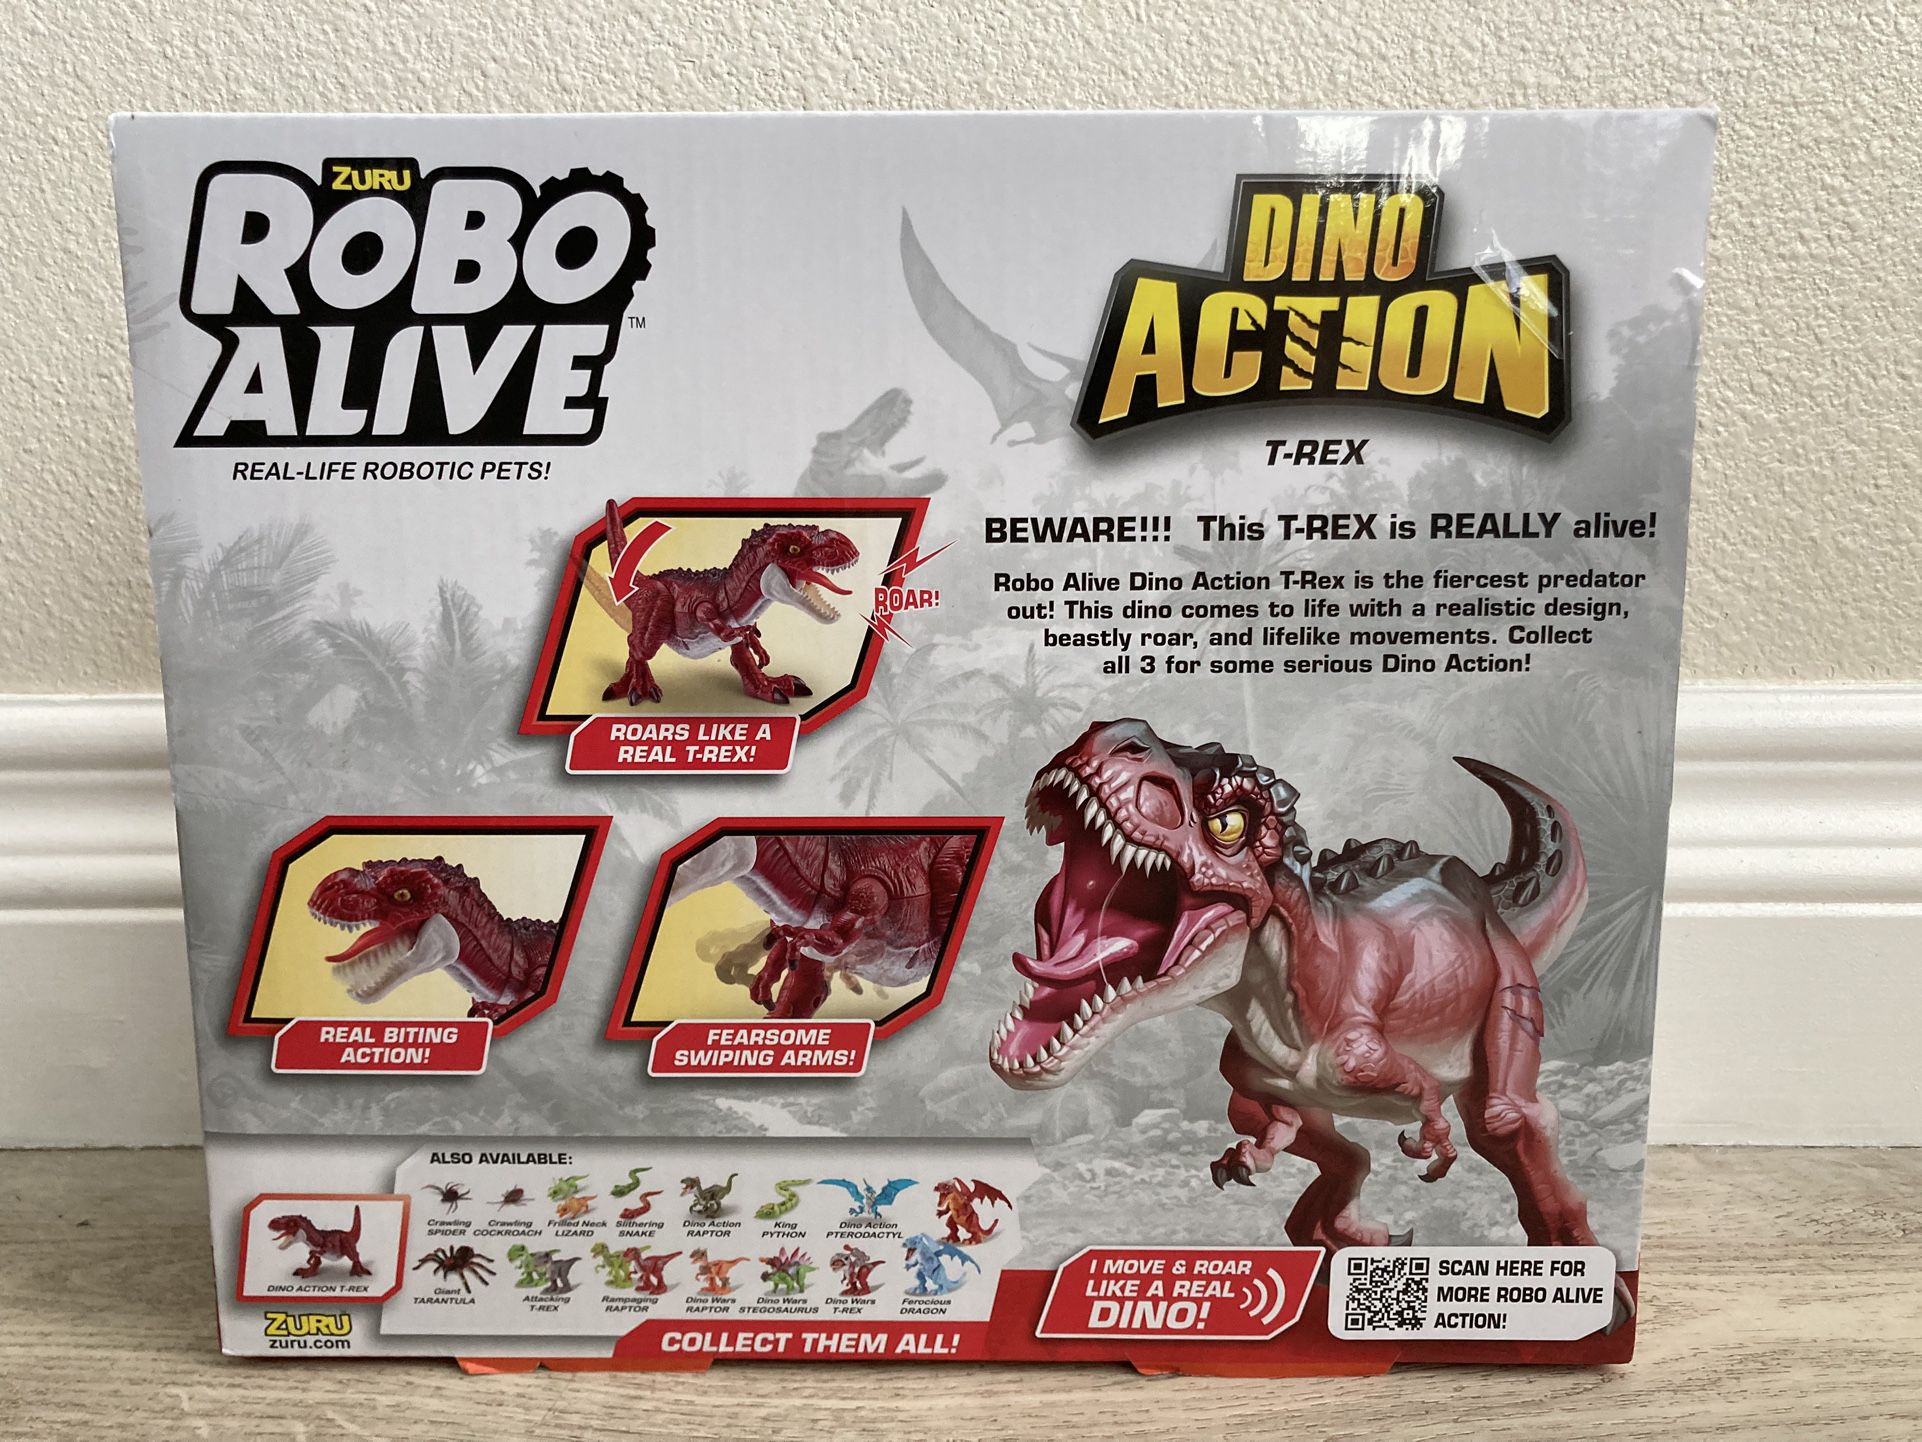 Robo Alive Dino Action T-Rex Robotic Dinosaur Toy by ZURU